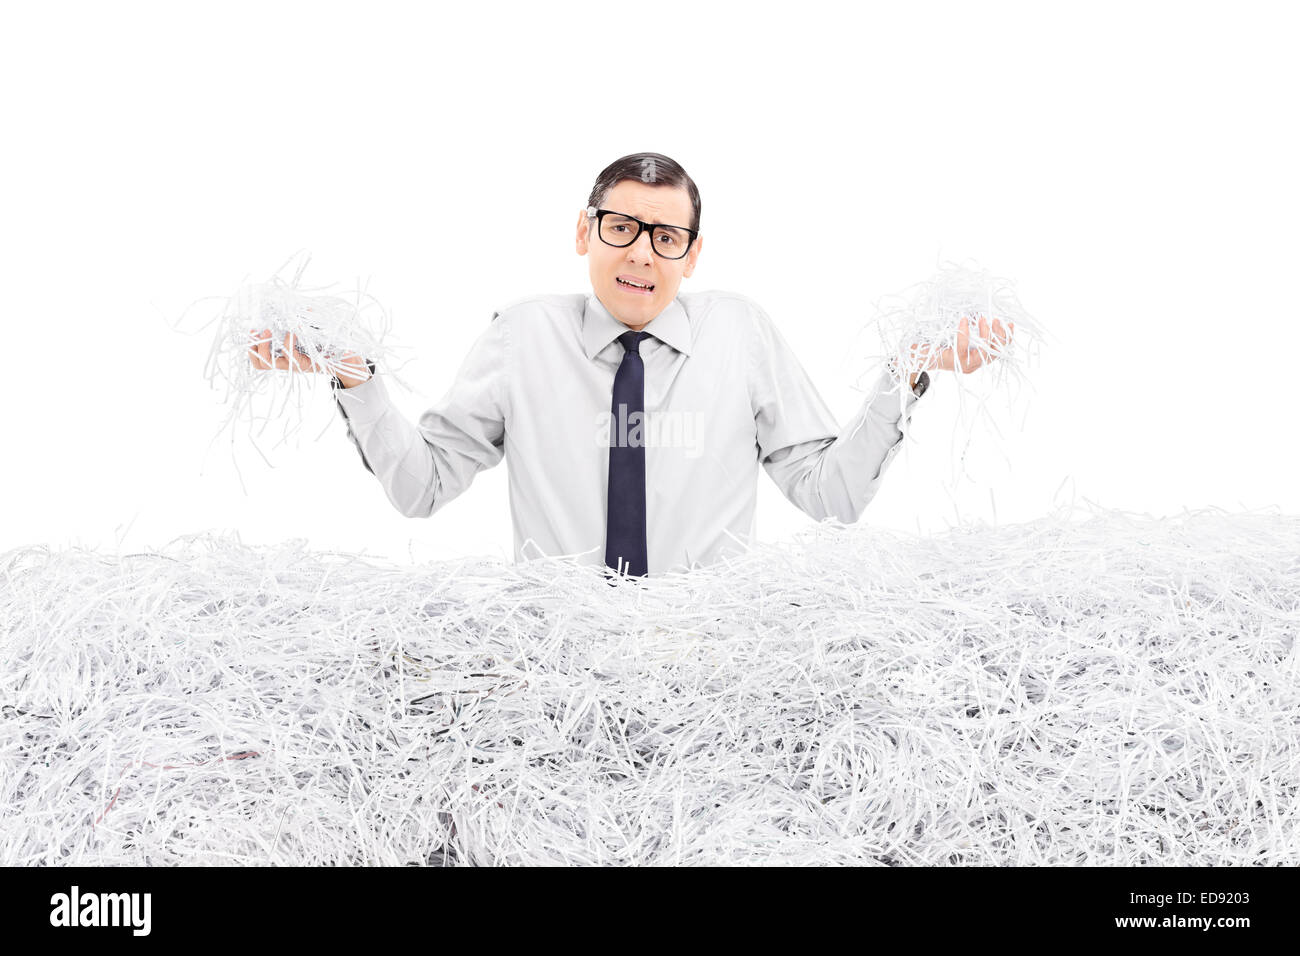 Employé impuissants holding bunch of shredded paper isolé sur fond blanc Banque D'Images